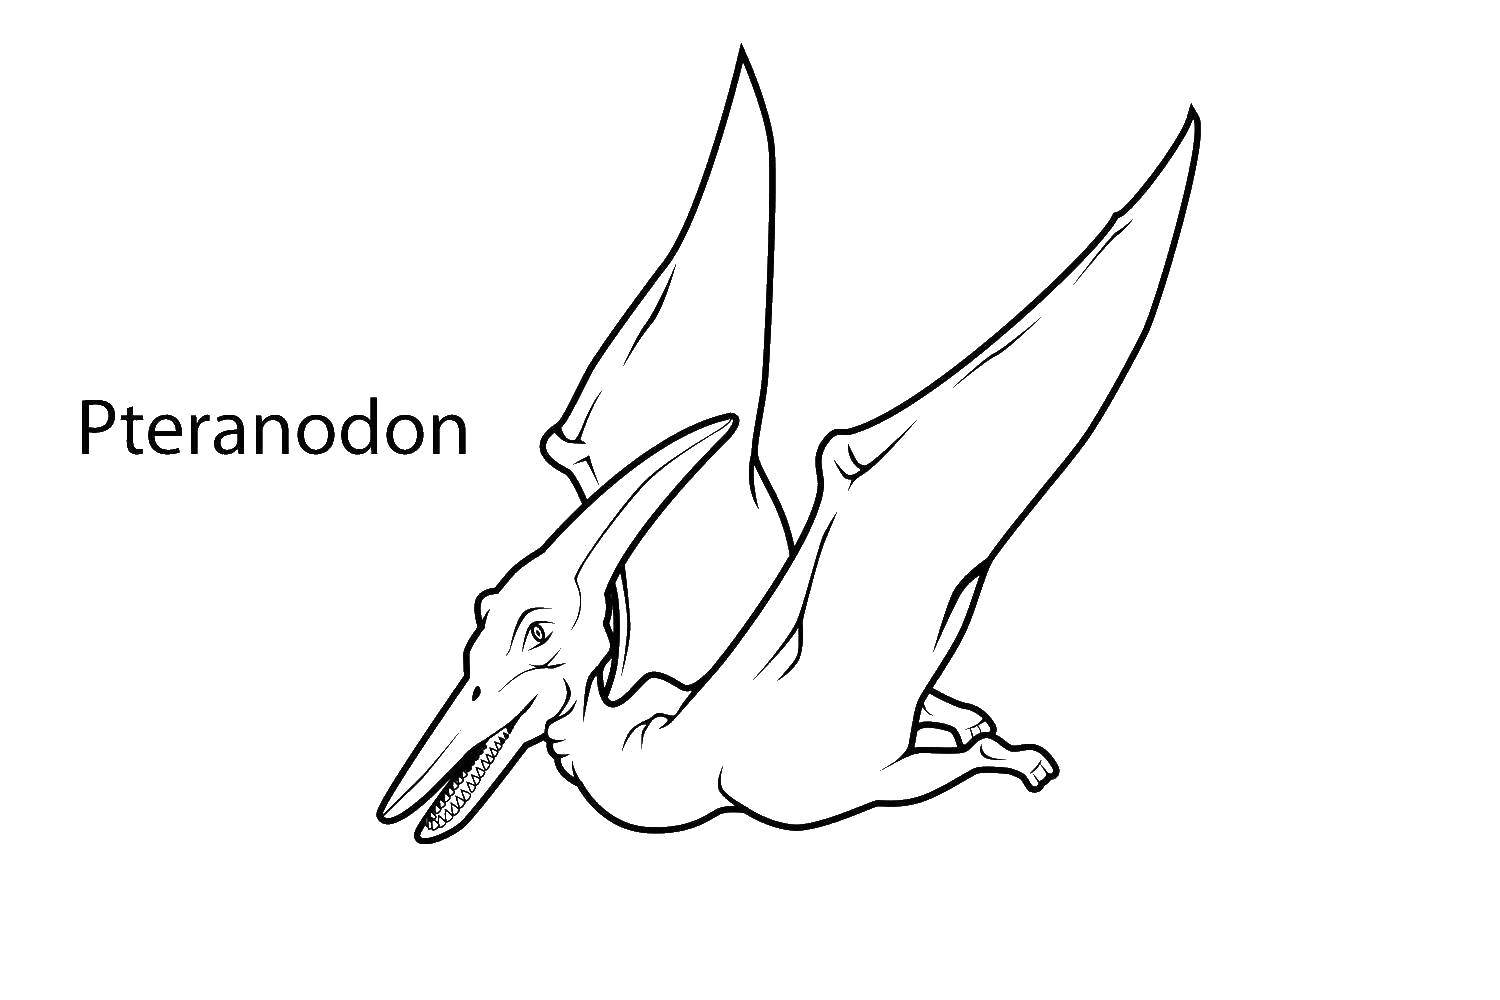 Coloring Pteranodon. Category dinosaur. Tags:  Dinosaurs , Pteranodon.